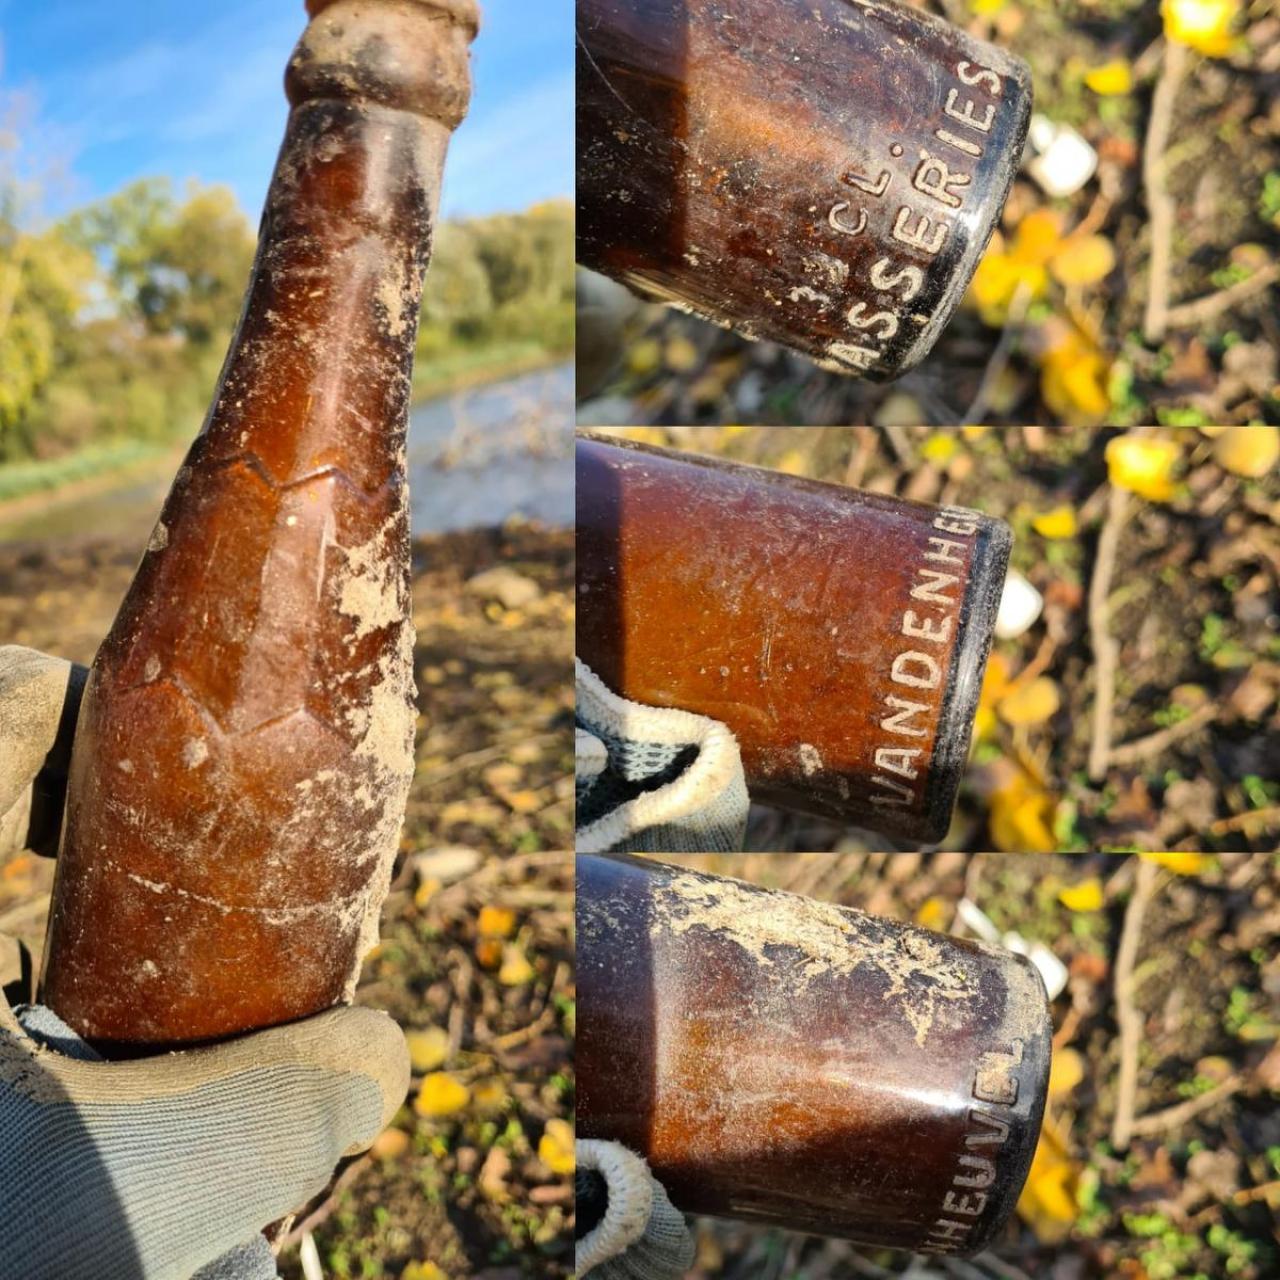 Oude fles van ongeveer 50 jaar oud van brouwerij Vandenheuvel, die stopte in 1974.